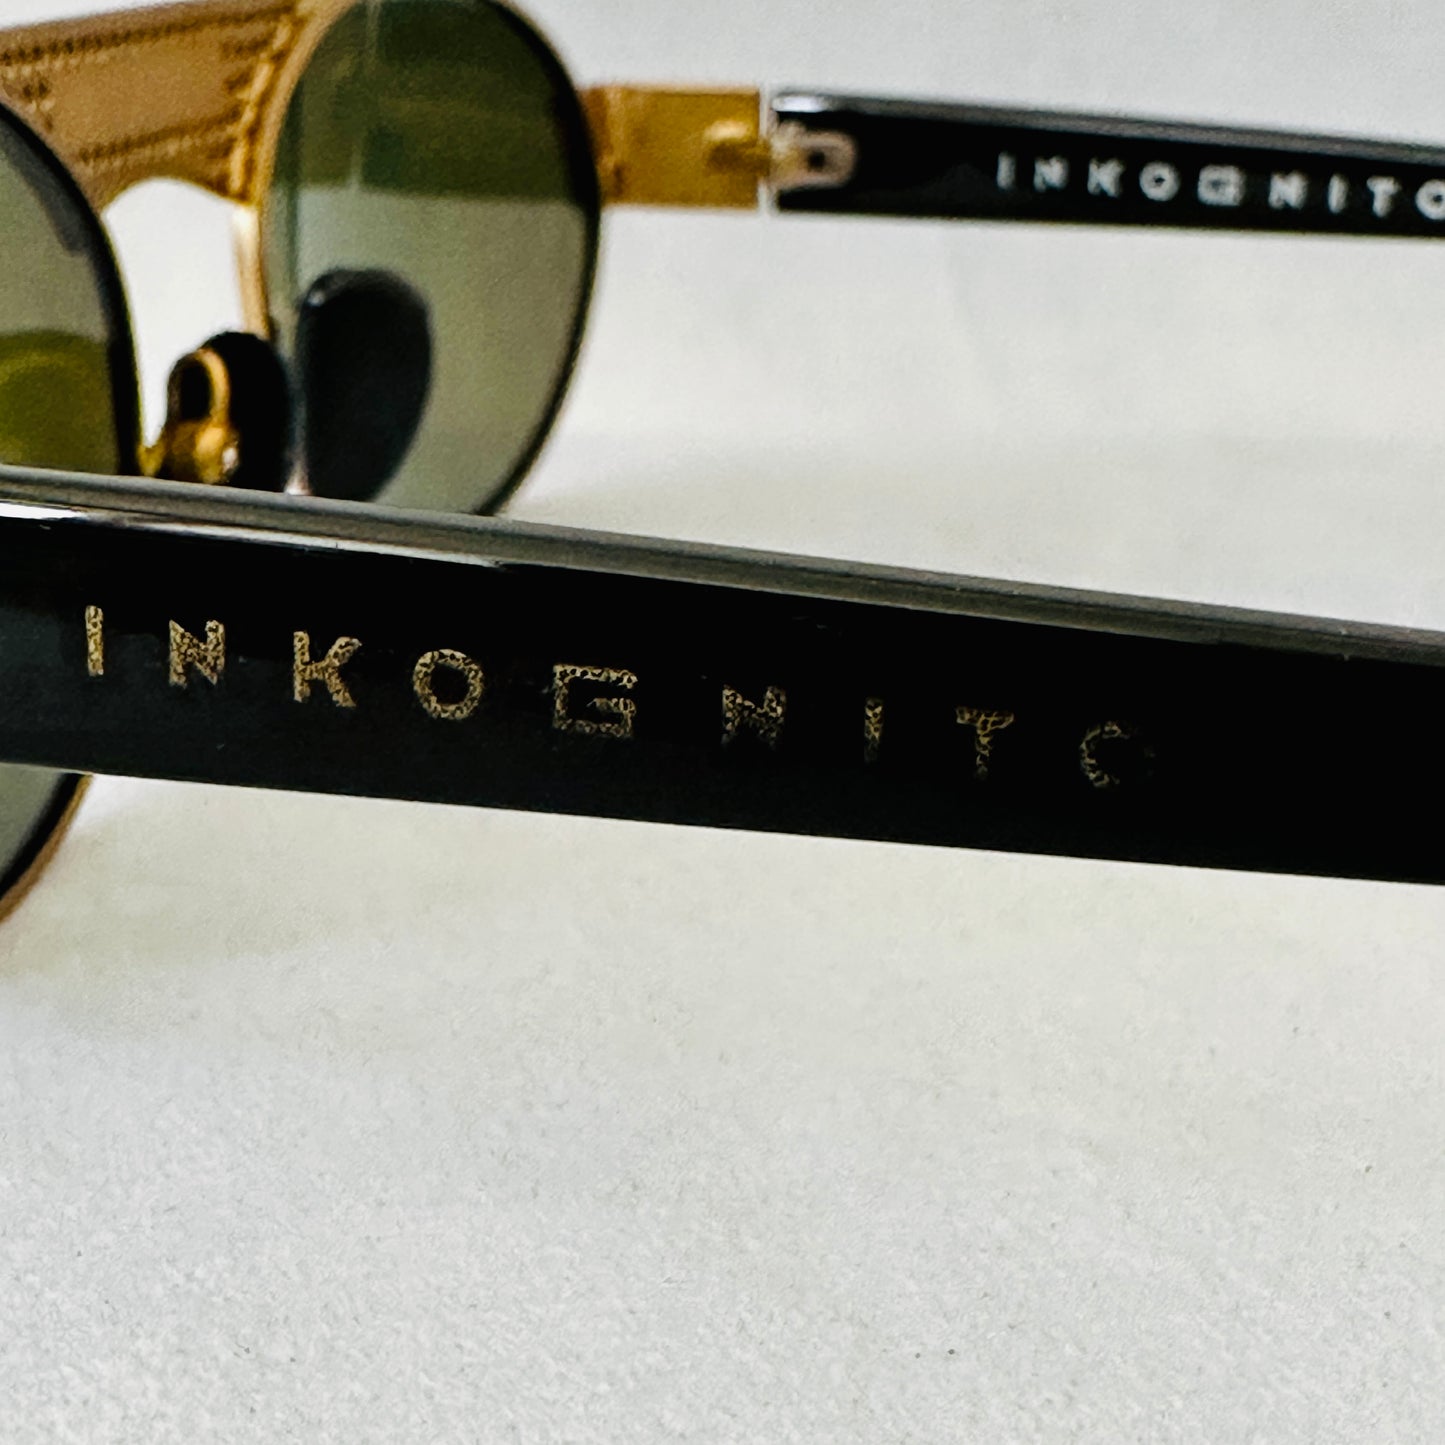 Polarod Inkognito Womens Vintage Sunglasses